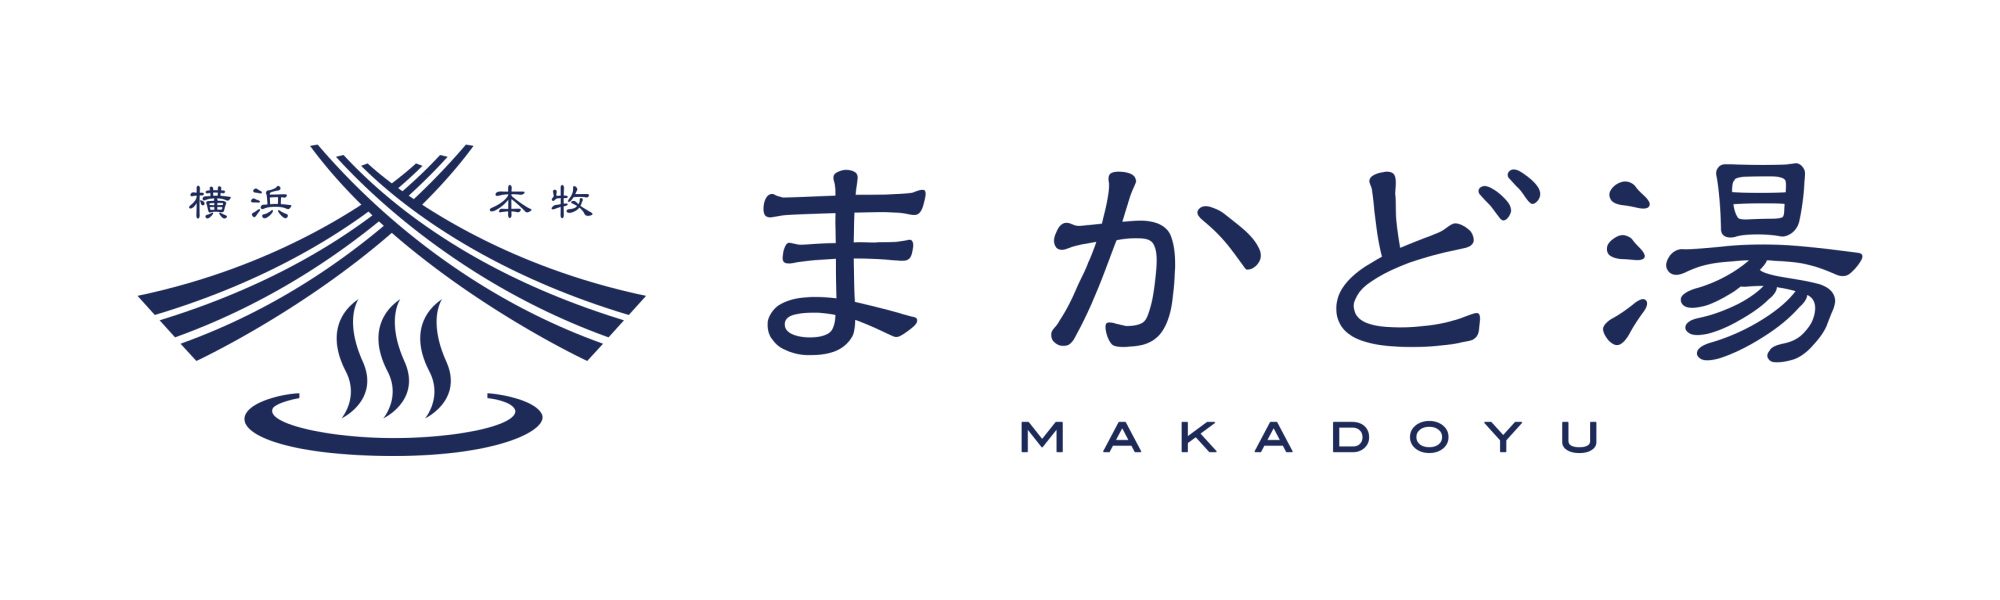 makadoyu_logo_yk